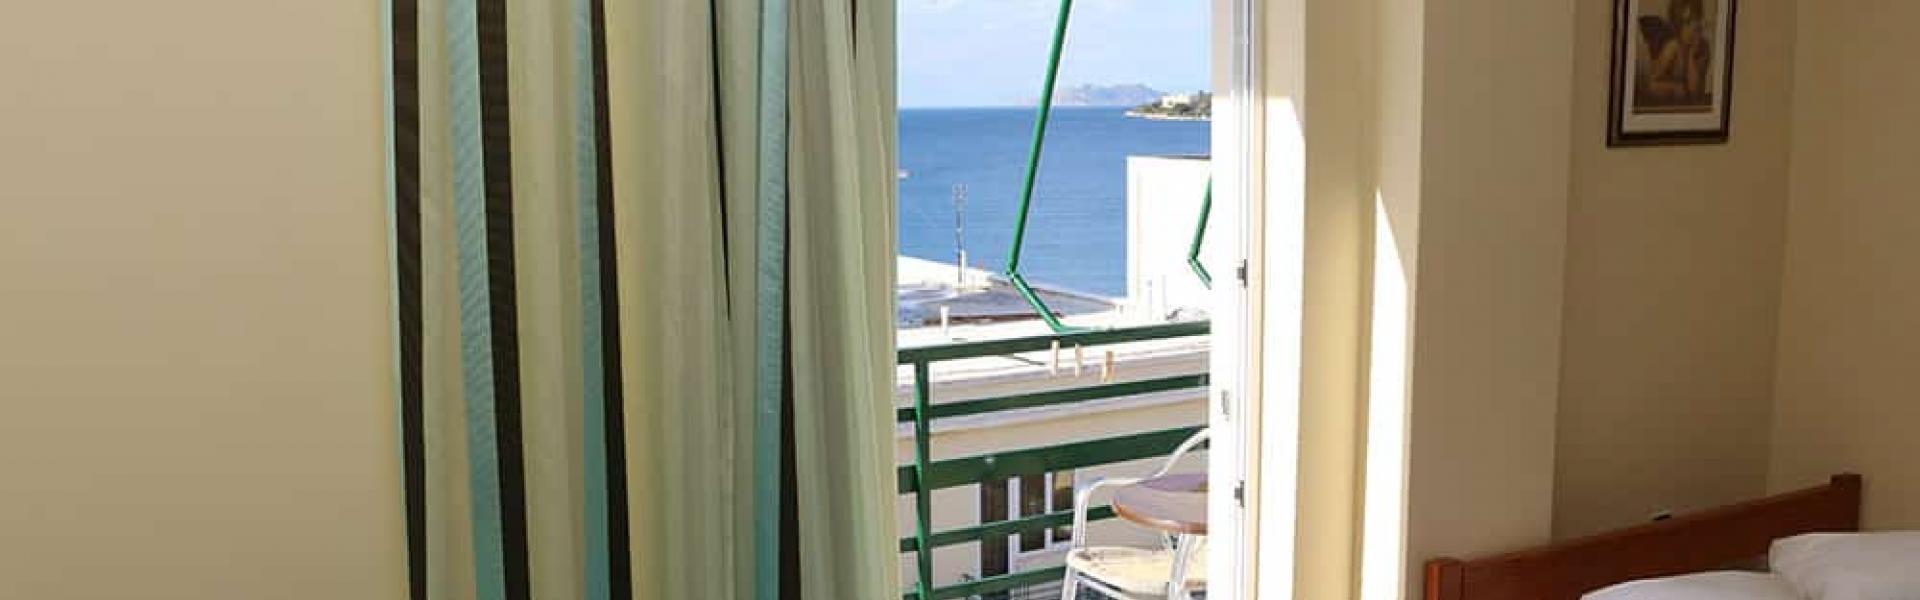 Hotel Loutraki accommodation